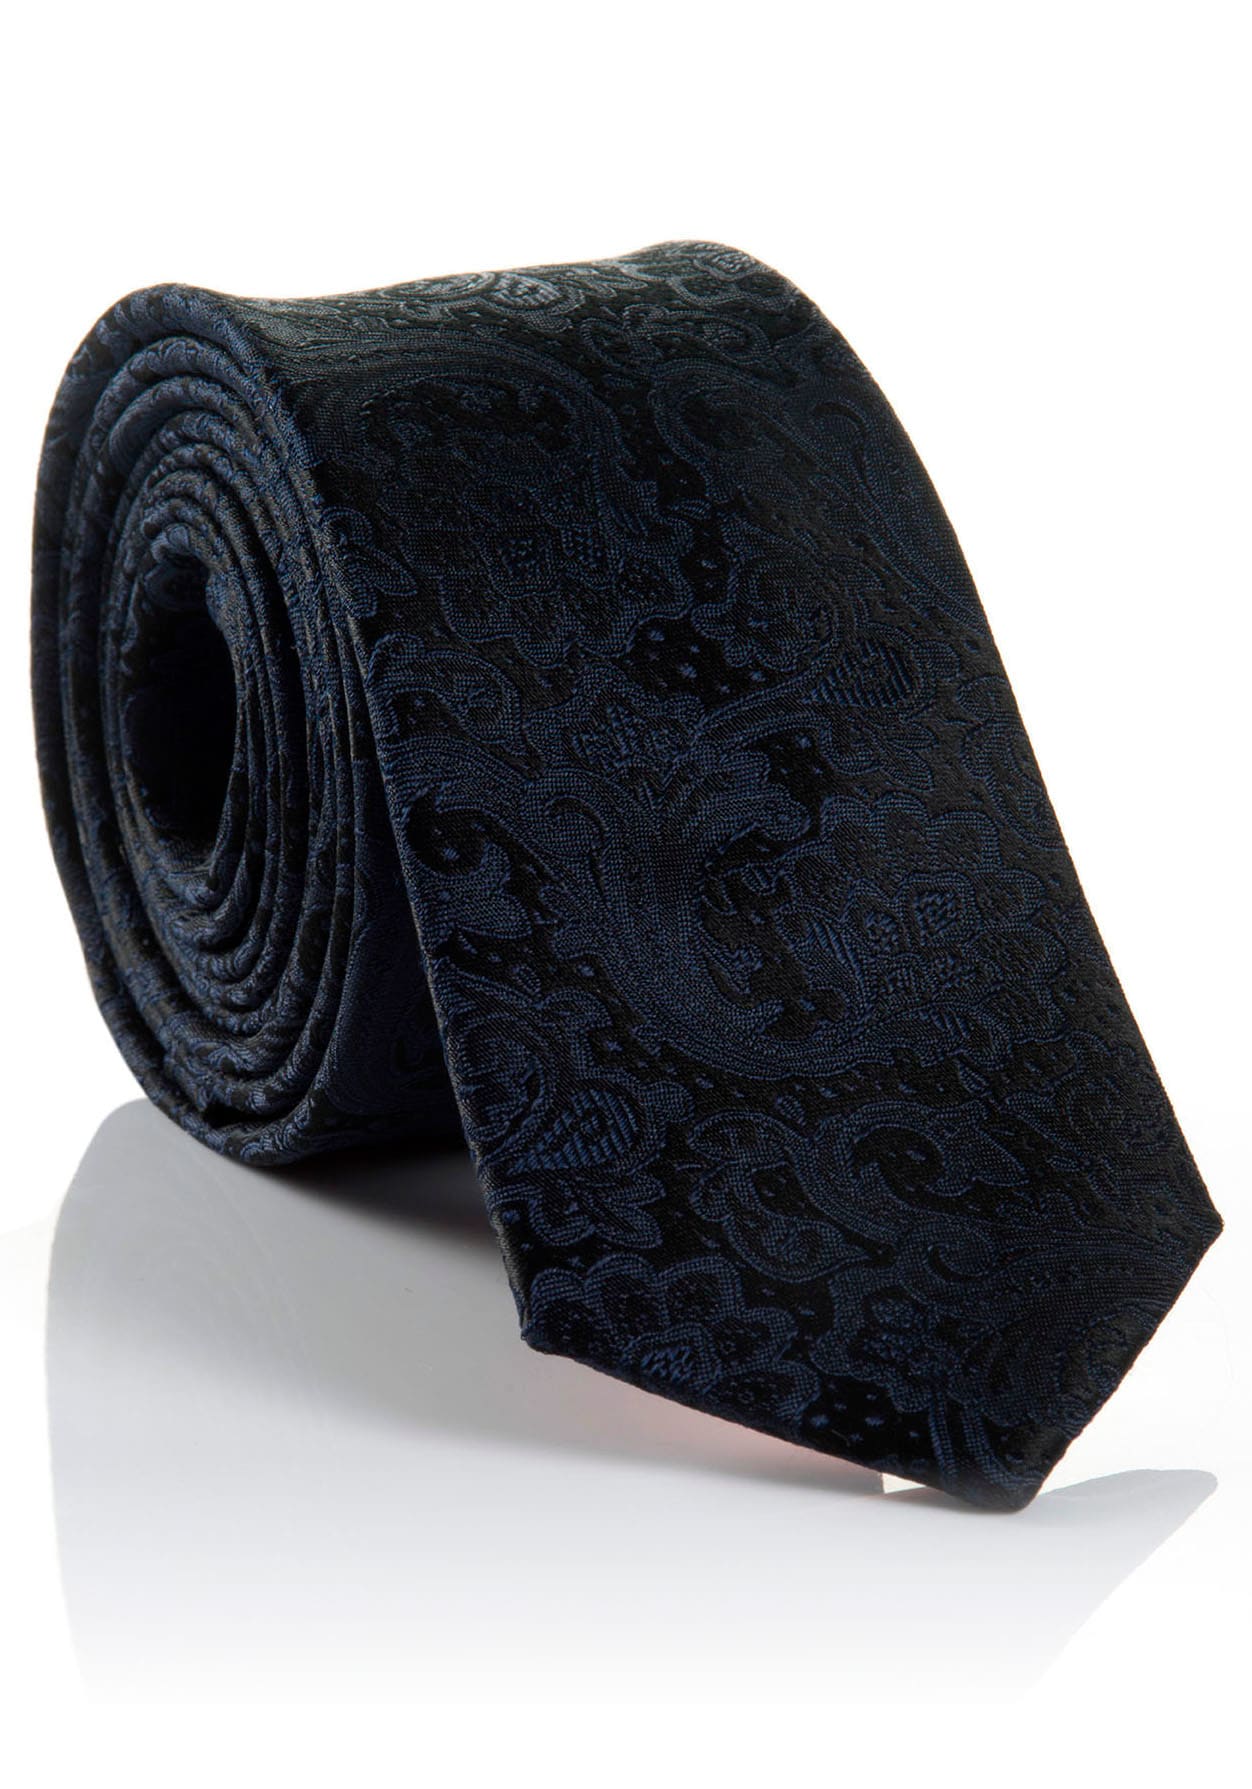 MONTI Krawatte »LUAN«, aus reiner Paisley-Muster bei online UNIVERSAL Seide